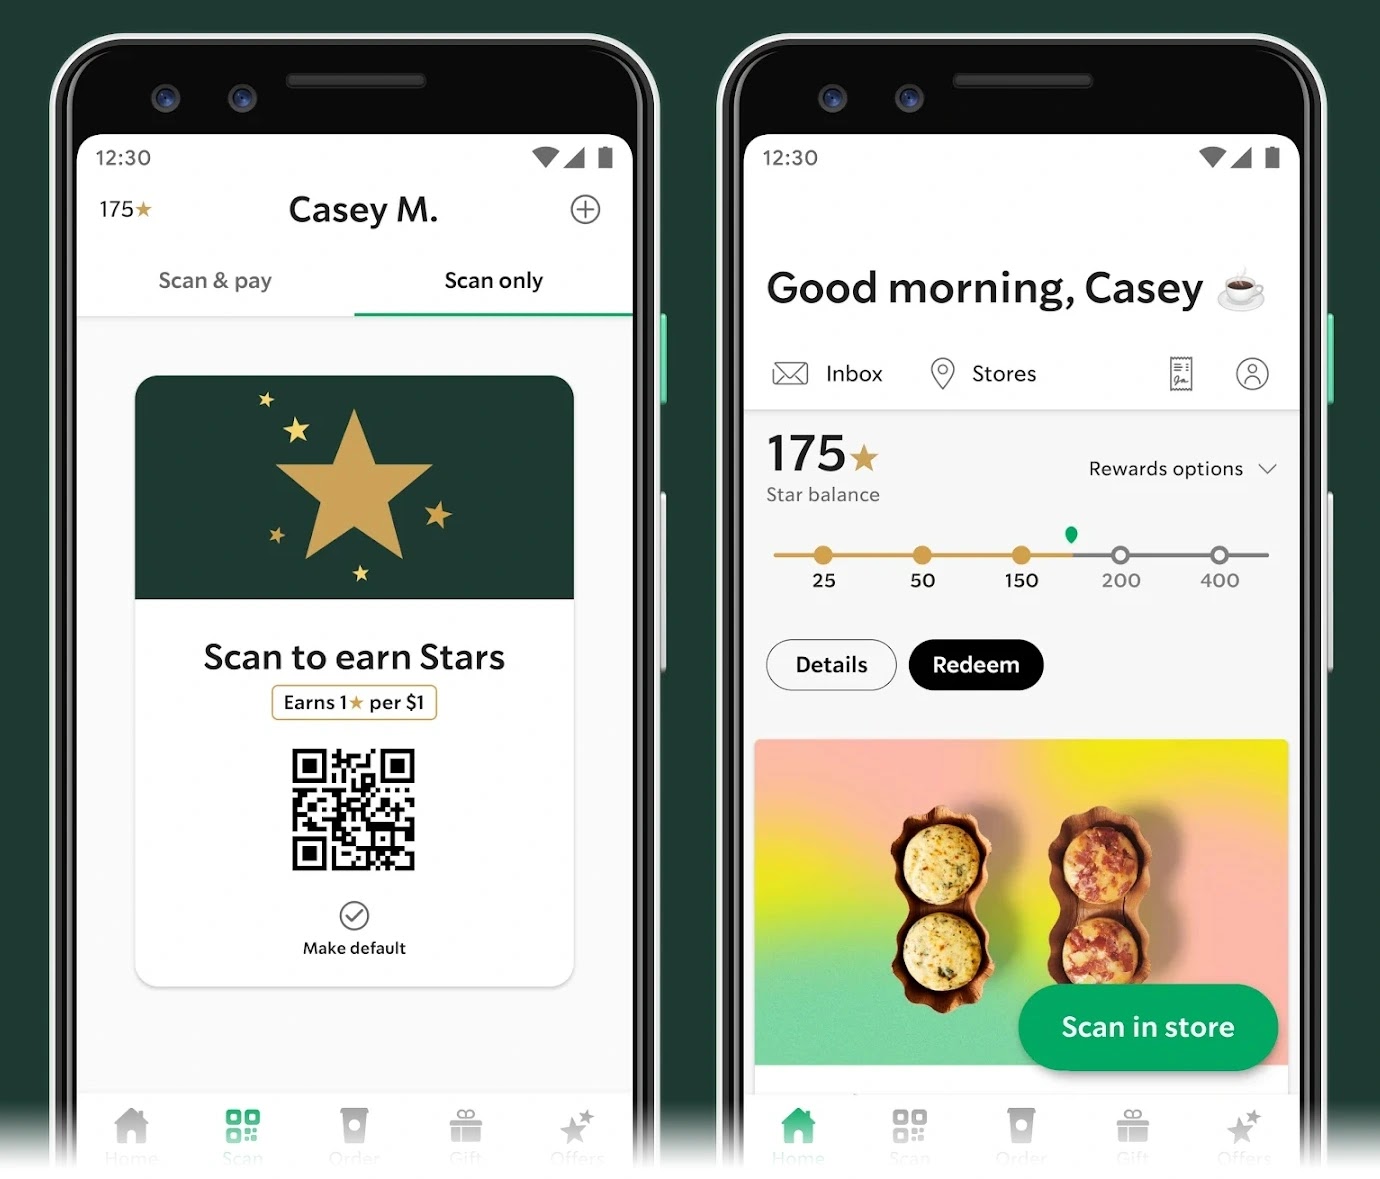 Loyalty rewards from Starbucks’ mobile app